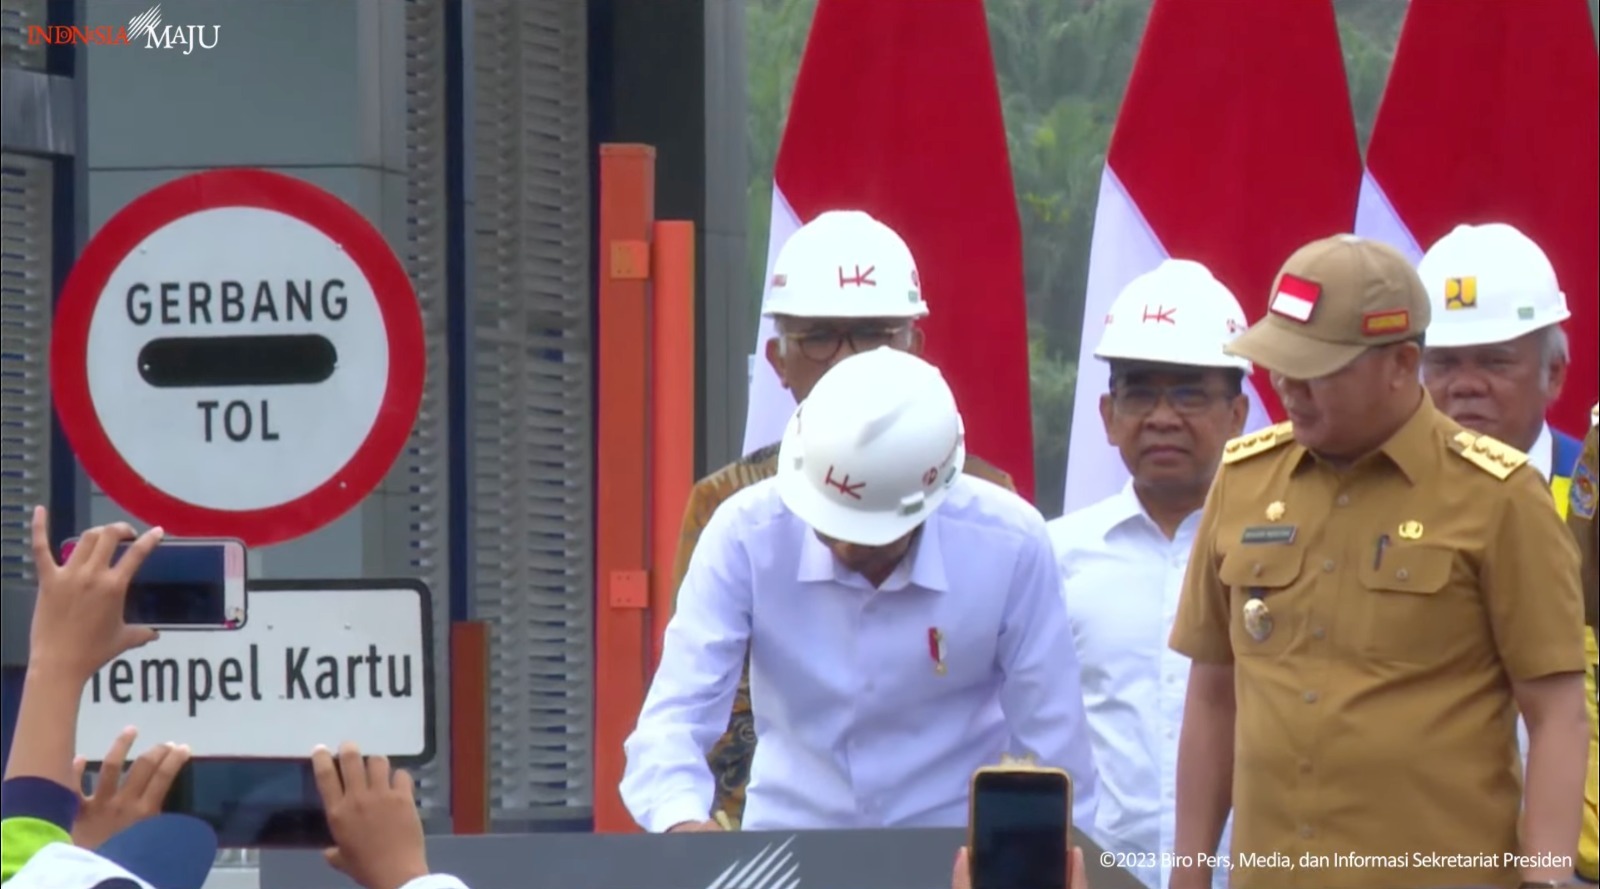 Resmikan Jalan Tol Bengkulu-Taba Penanjung, Jokowi:  Tol Bengkulu - Lubuk Linggau Dilanjutkan 